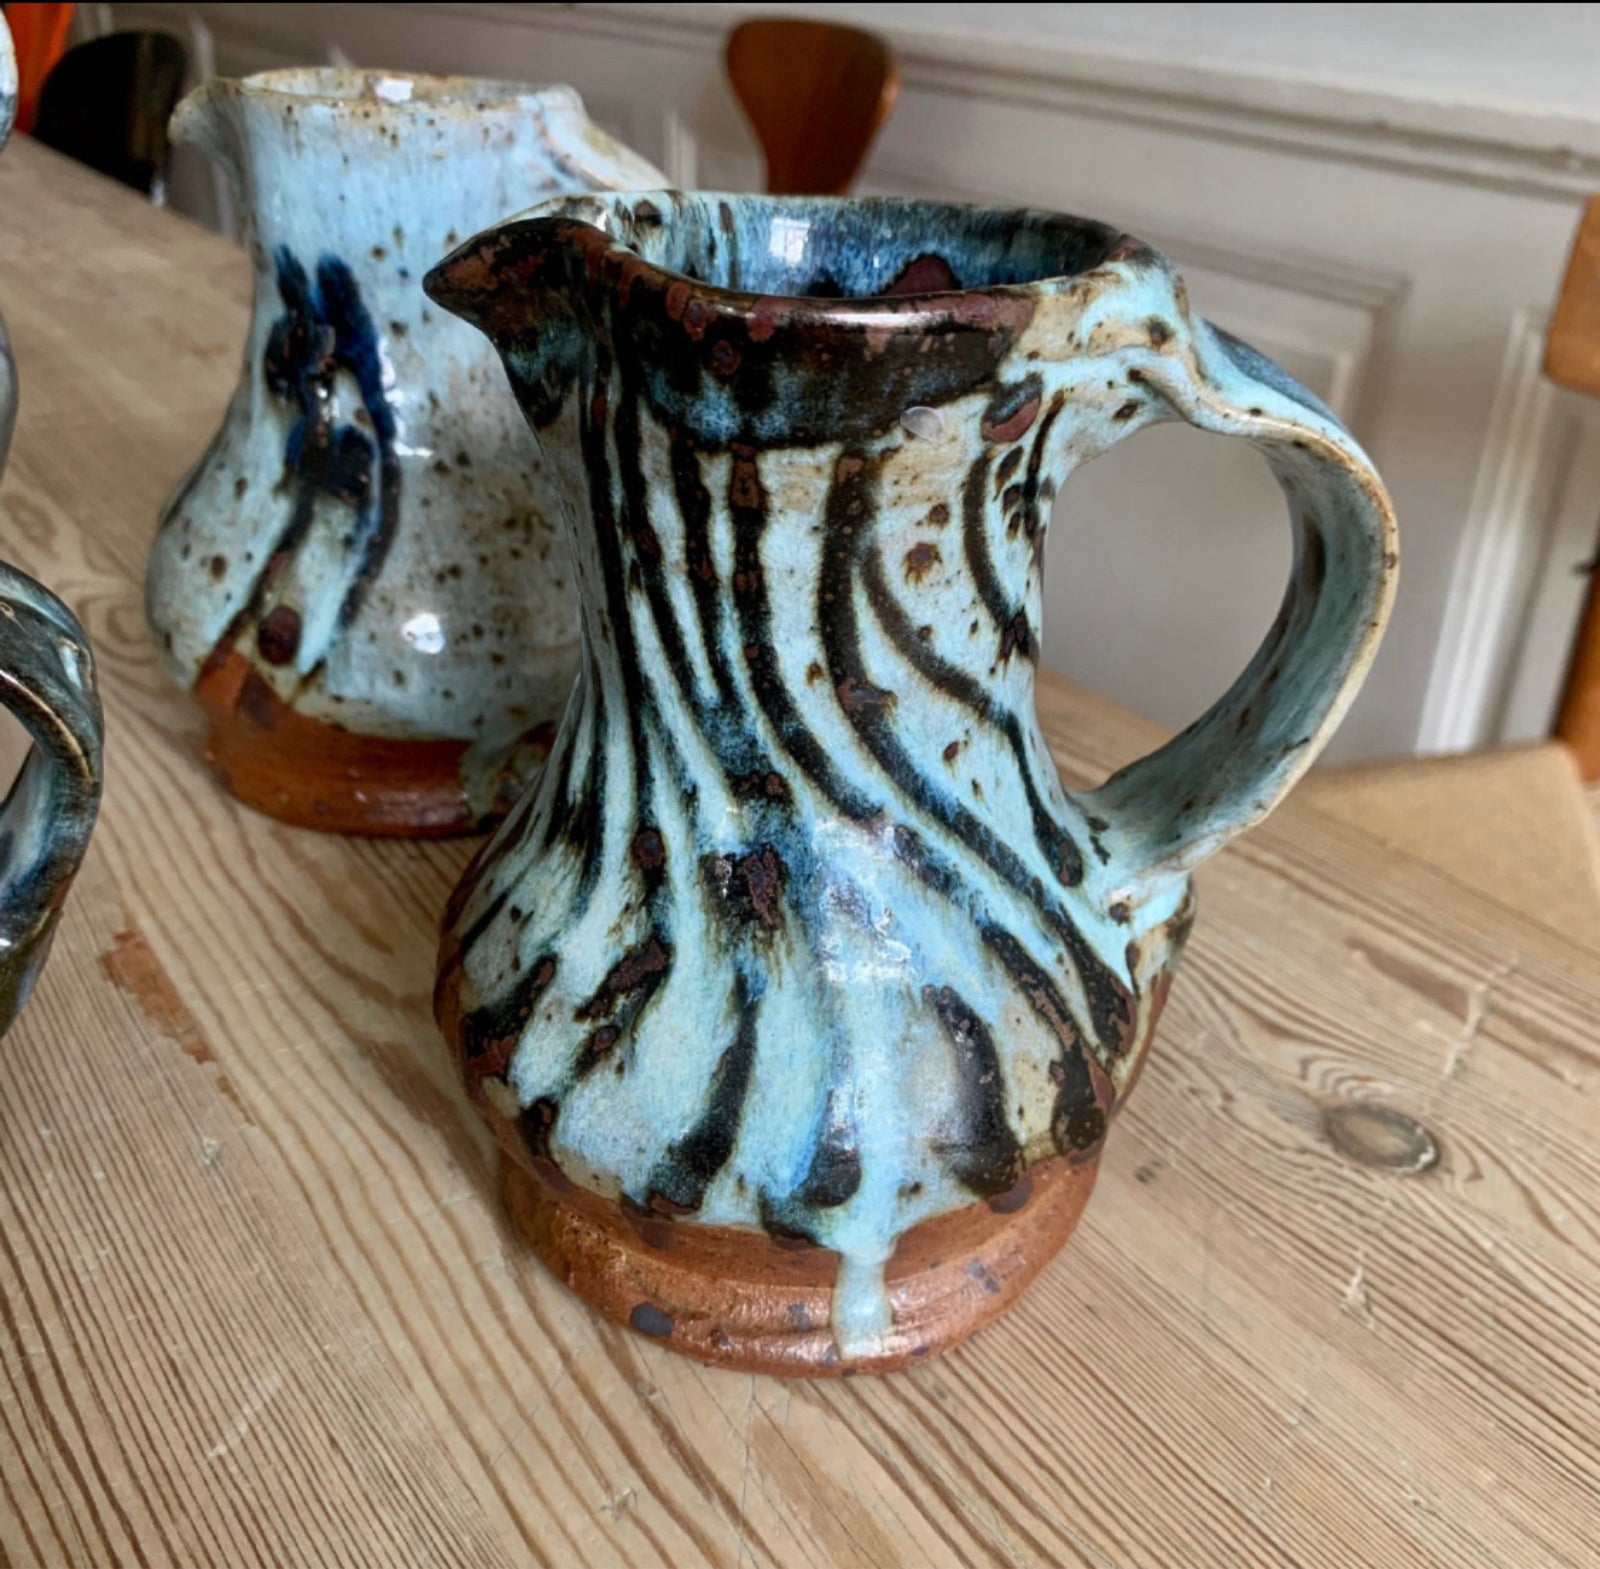 Keramik, Anne Kjærsgaard